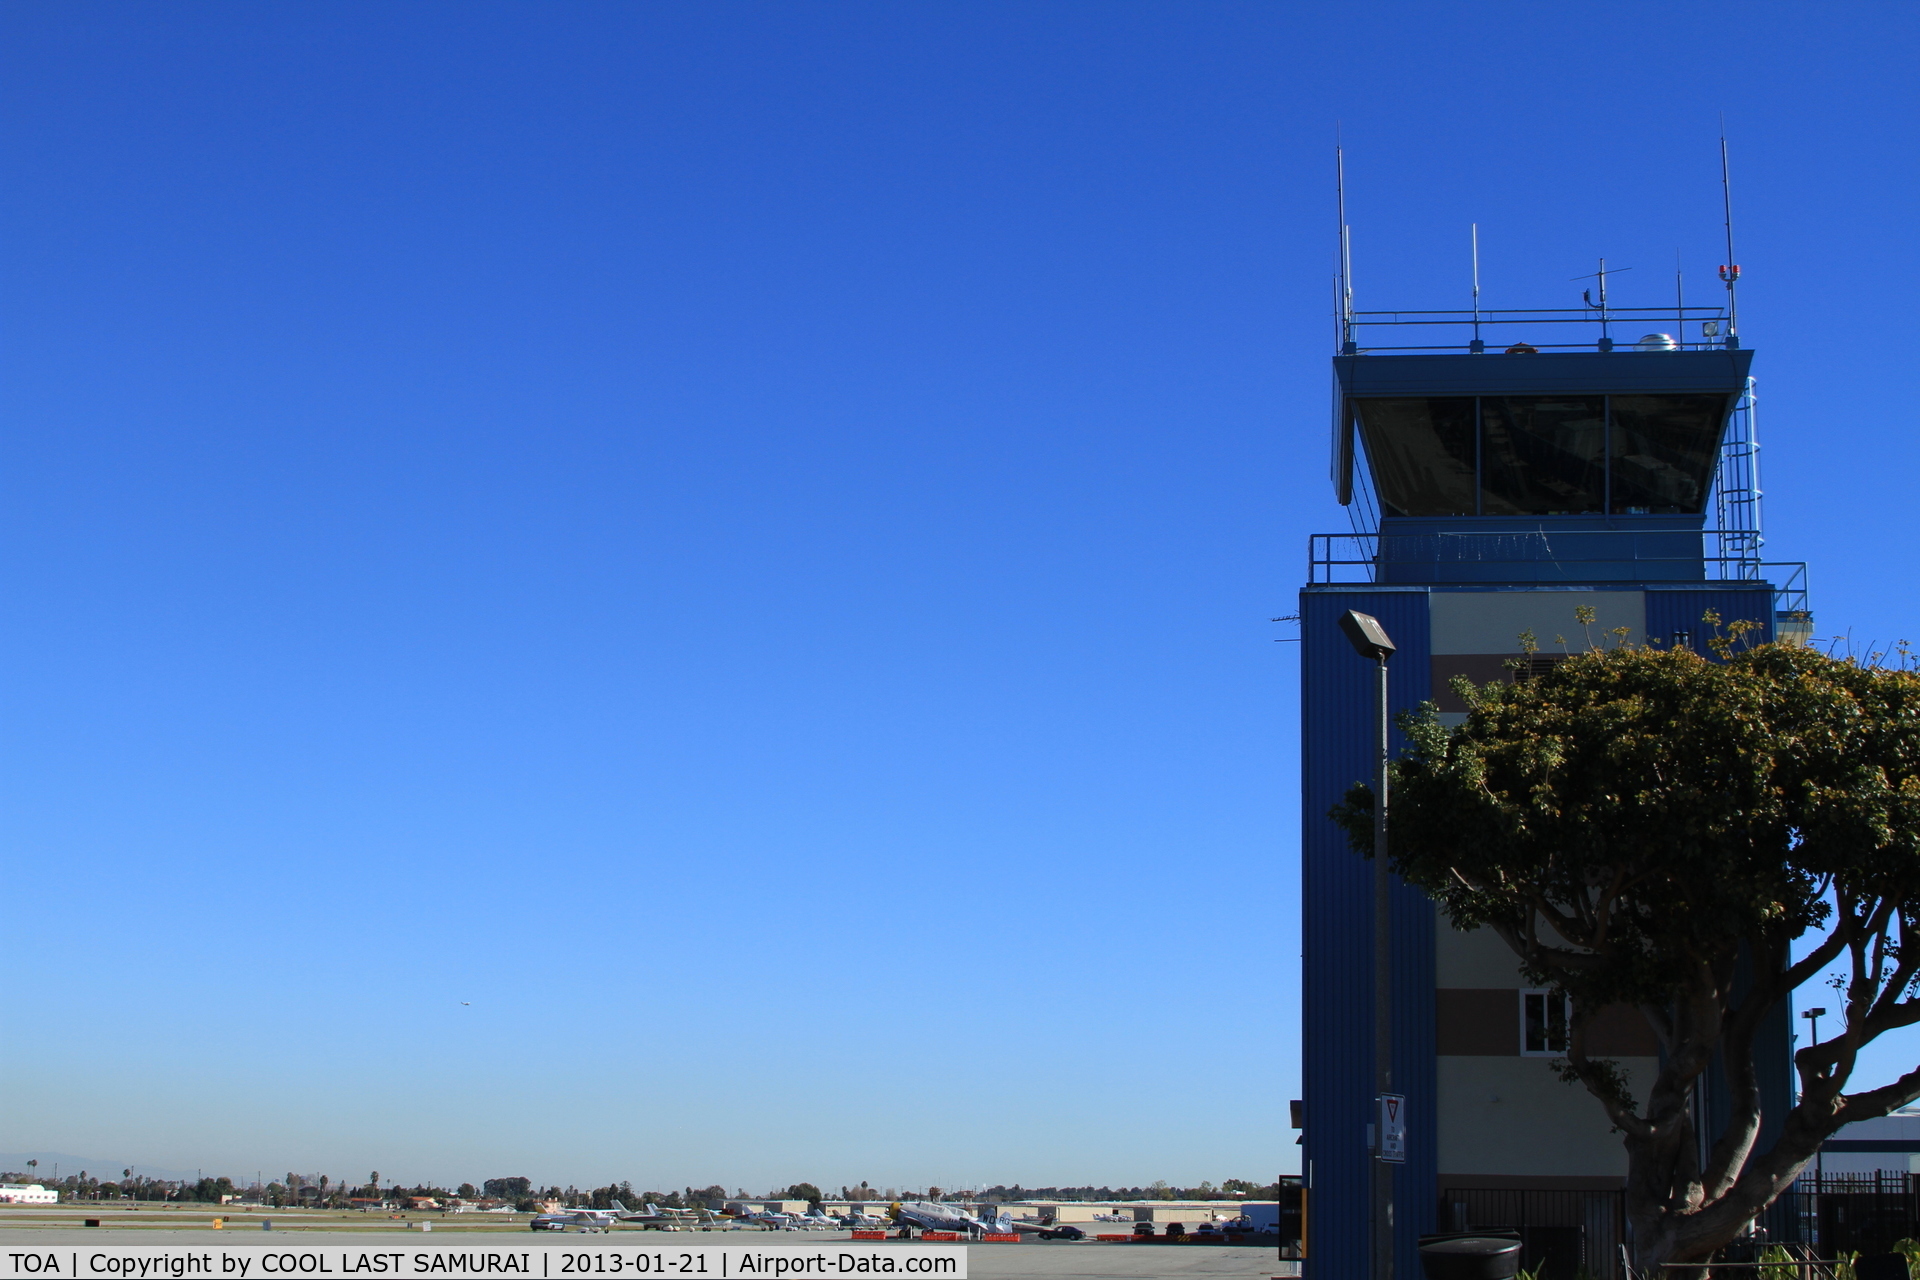 Zamperini Field Airport (TOA) - FAA tower